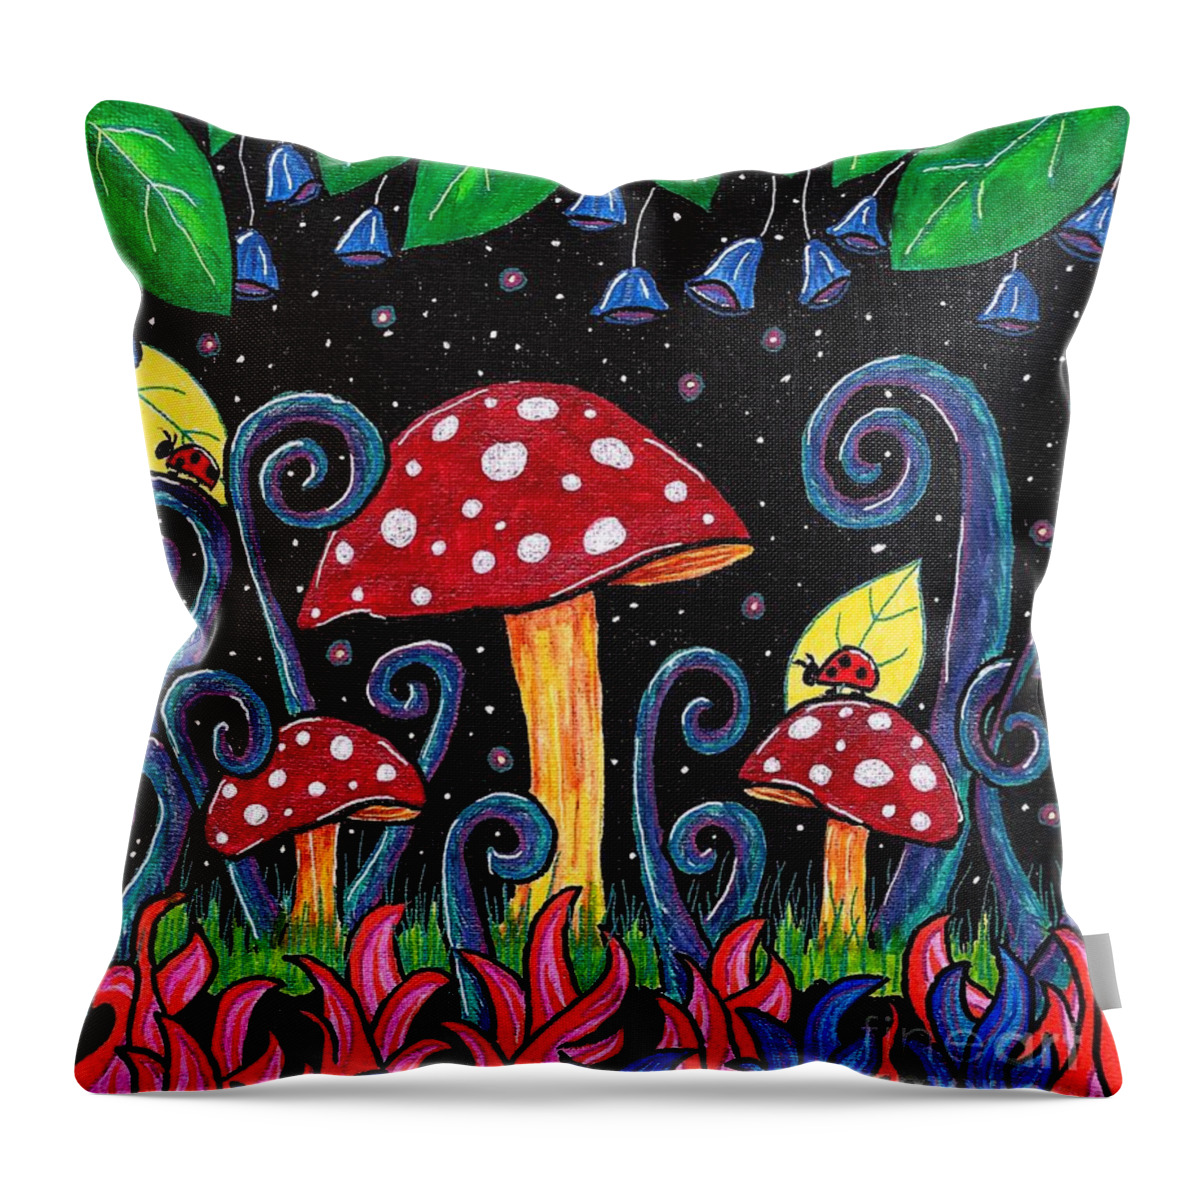 Mushroom Throw Pillow featuring the painting Mushroom Night by Gemma Reece-Holloway